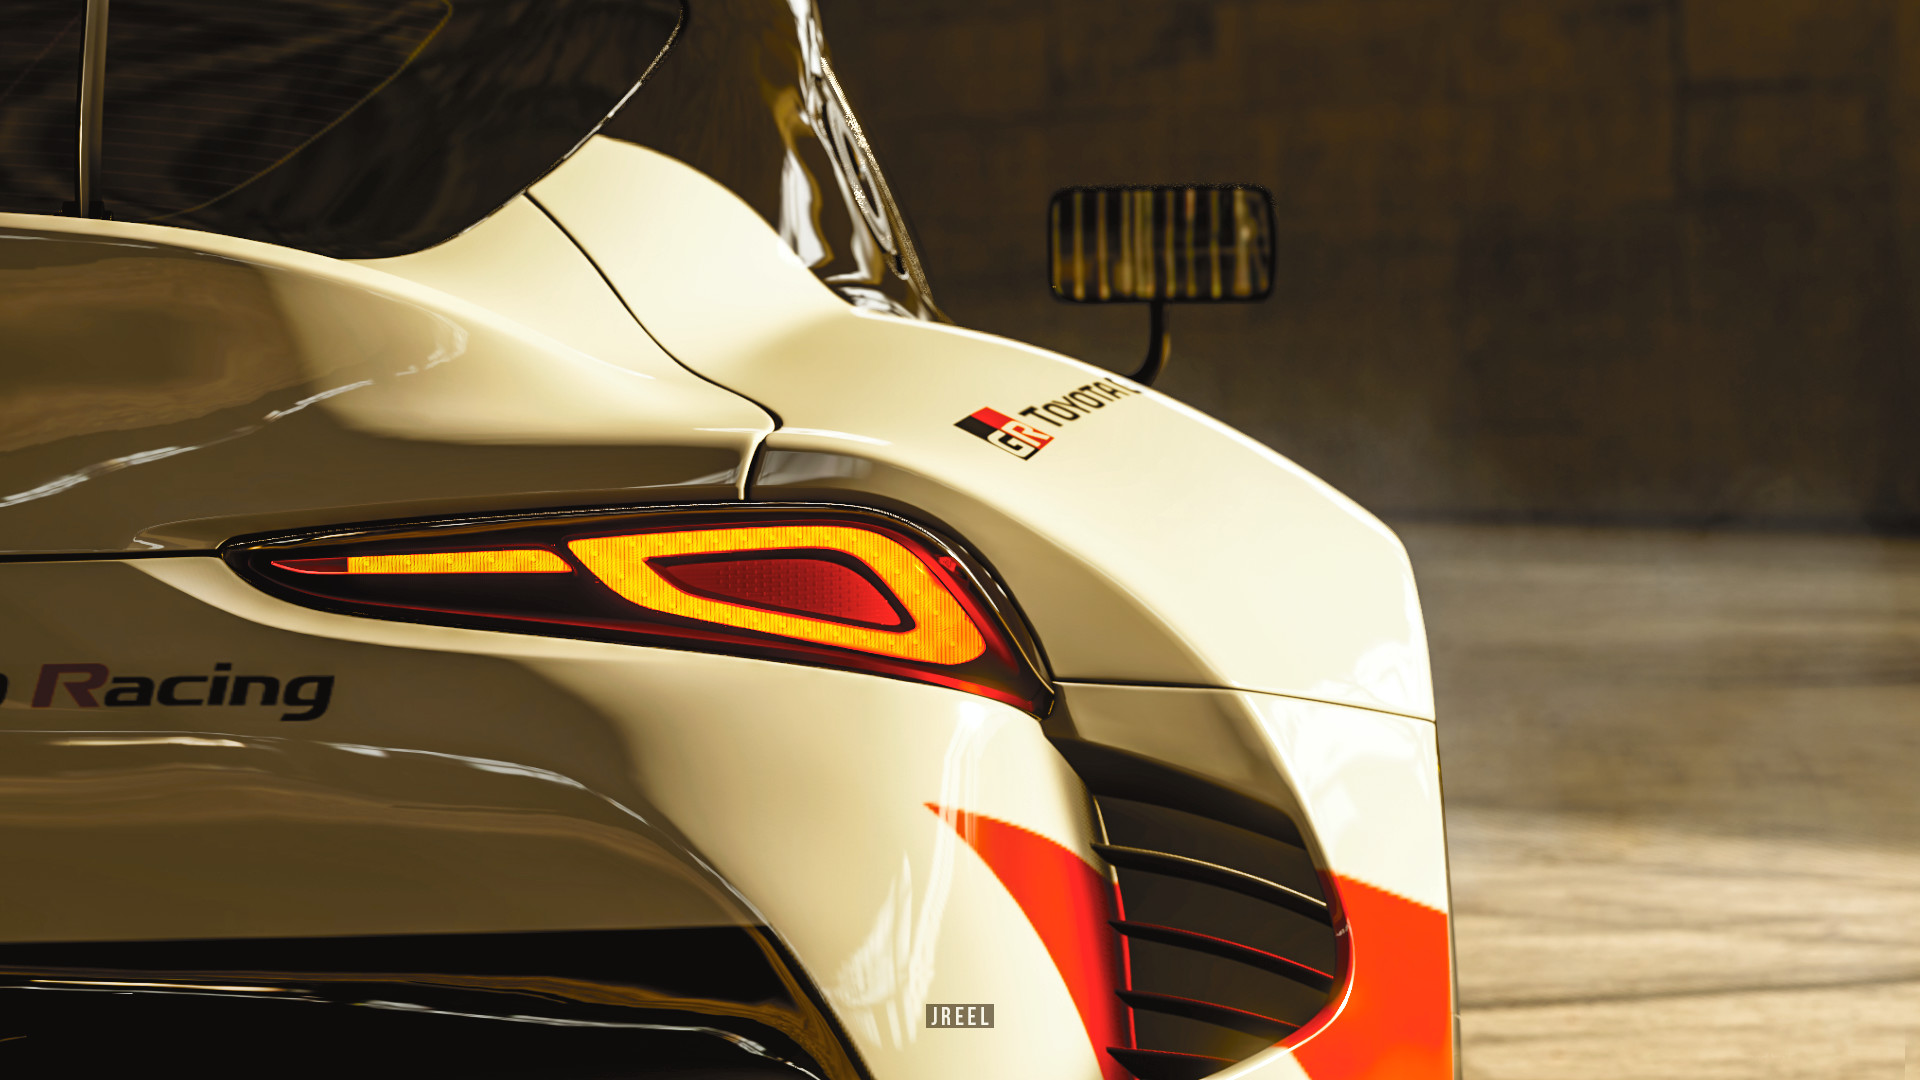 Video Game Gran Turismo Sport HD Wallpaper | Background Image